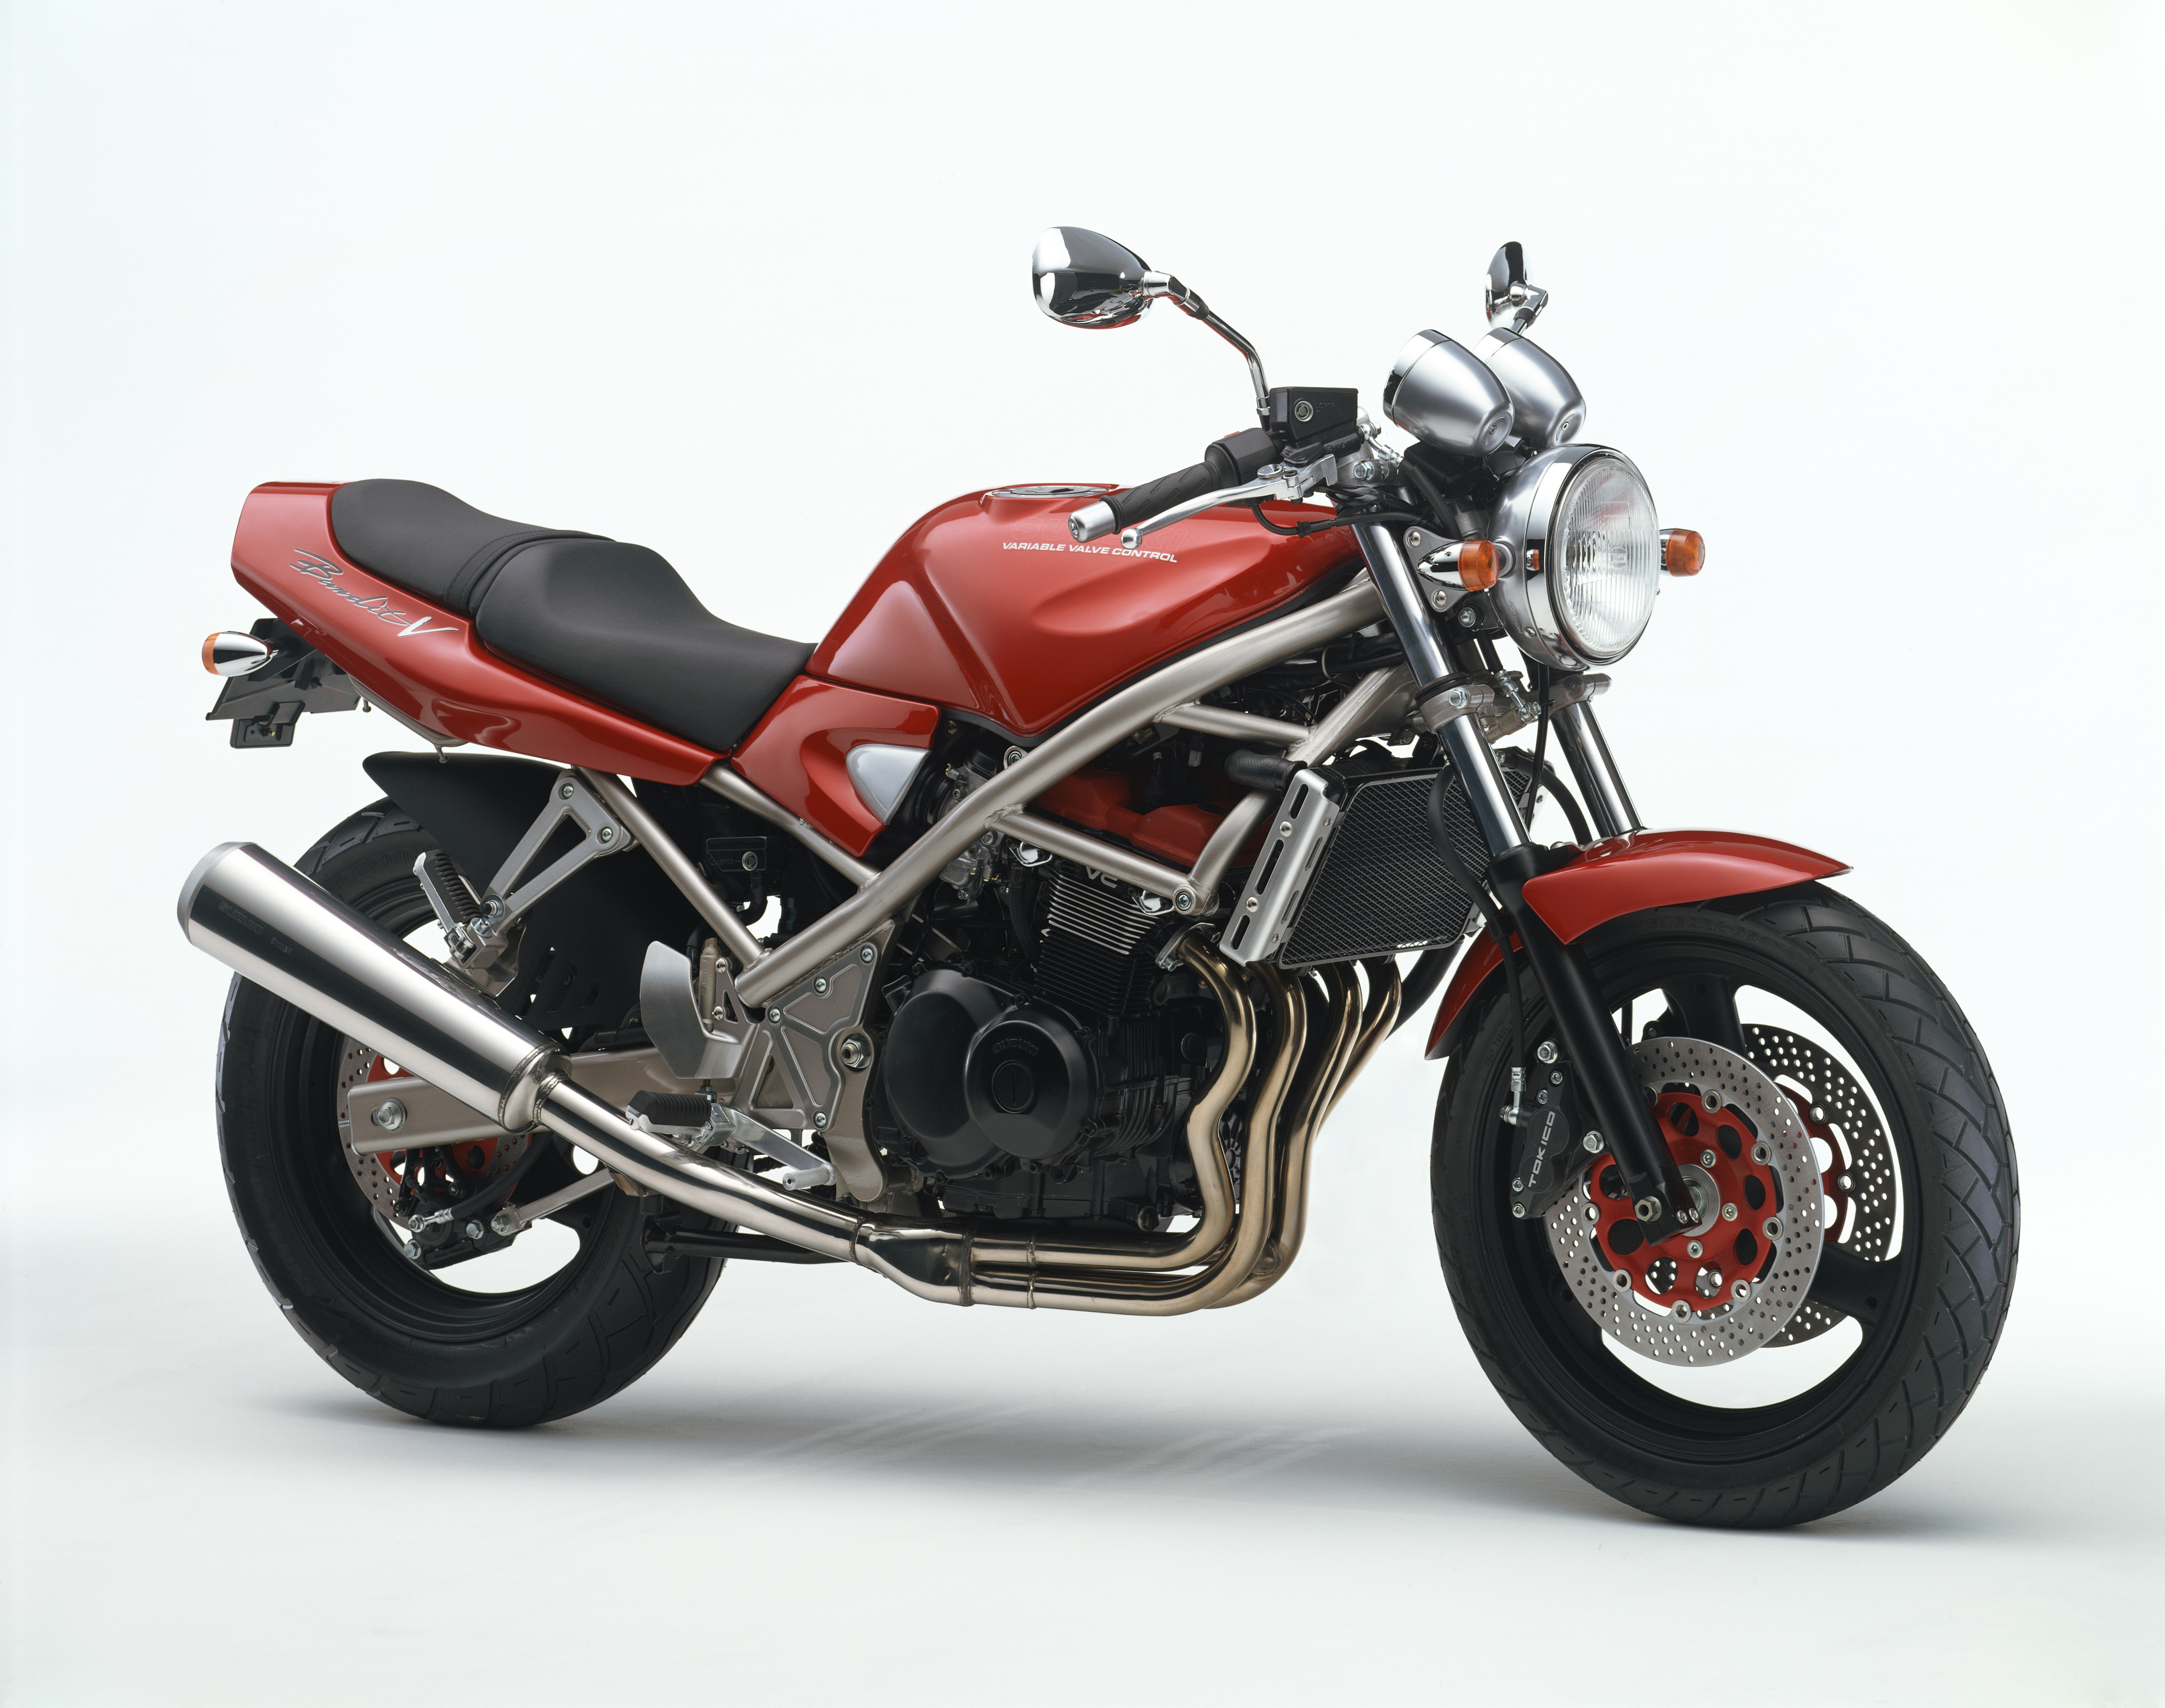 Honda CB400SF VS Suzuki Bandit 400 specifications  YouTube